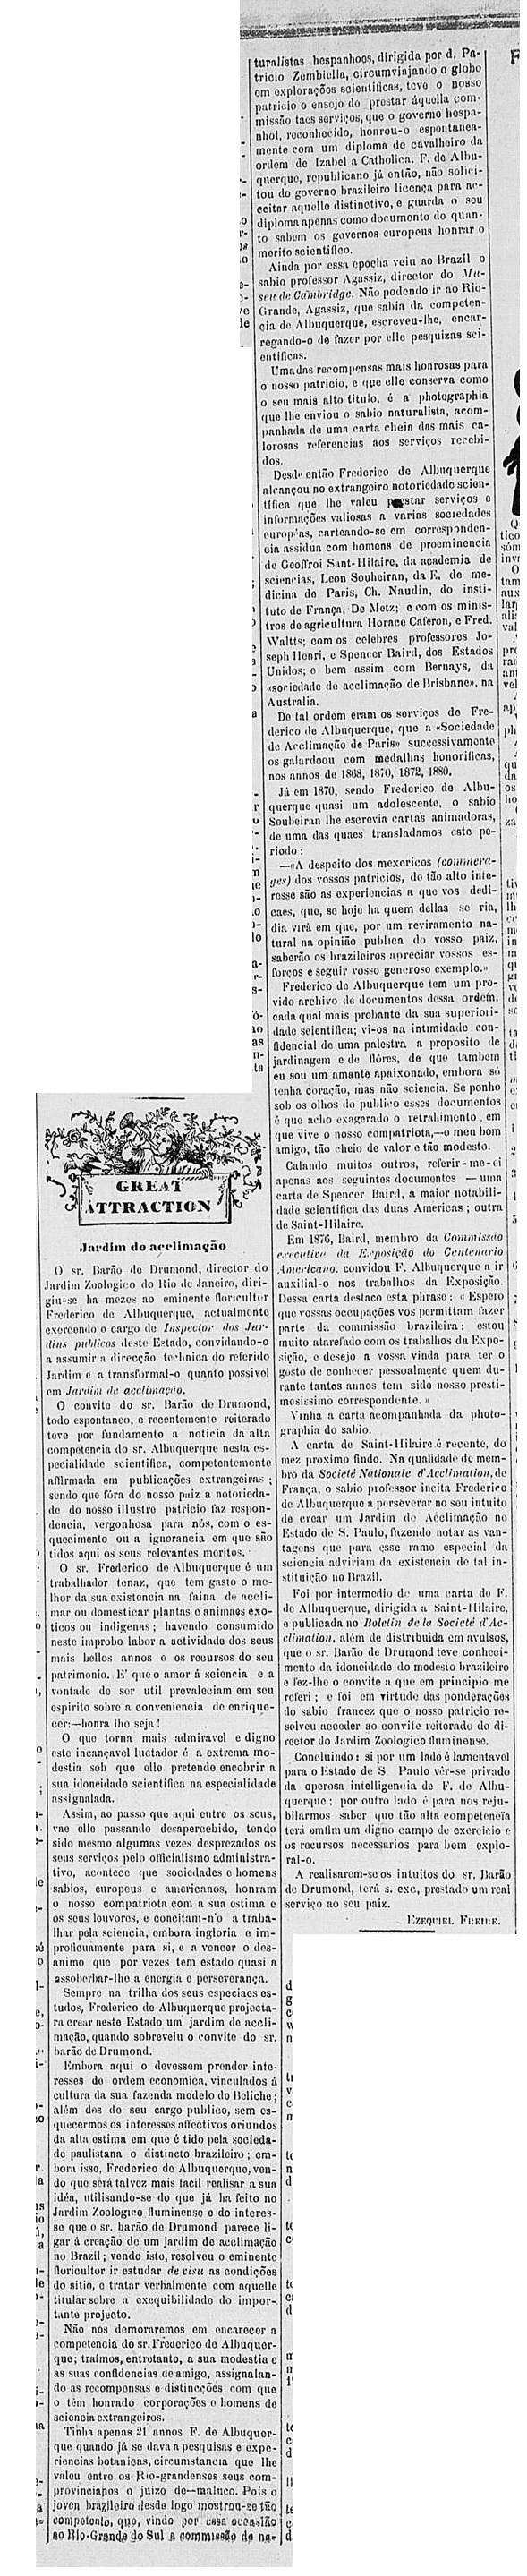 Correio Paulistano _ 30 julho 1890